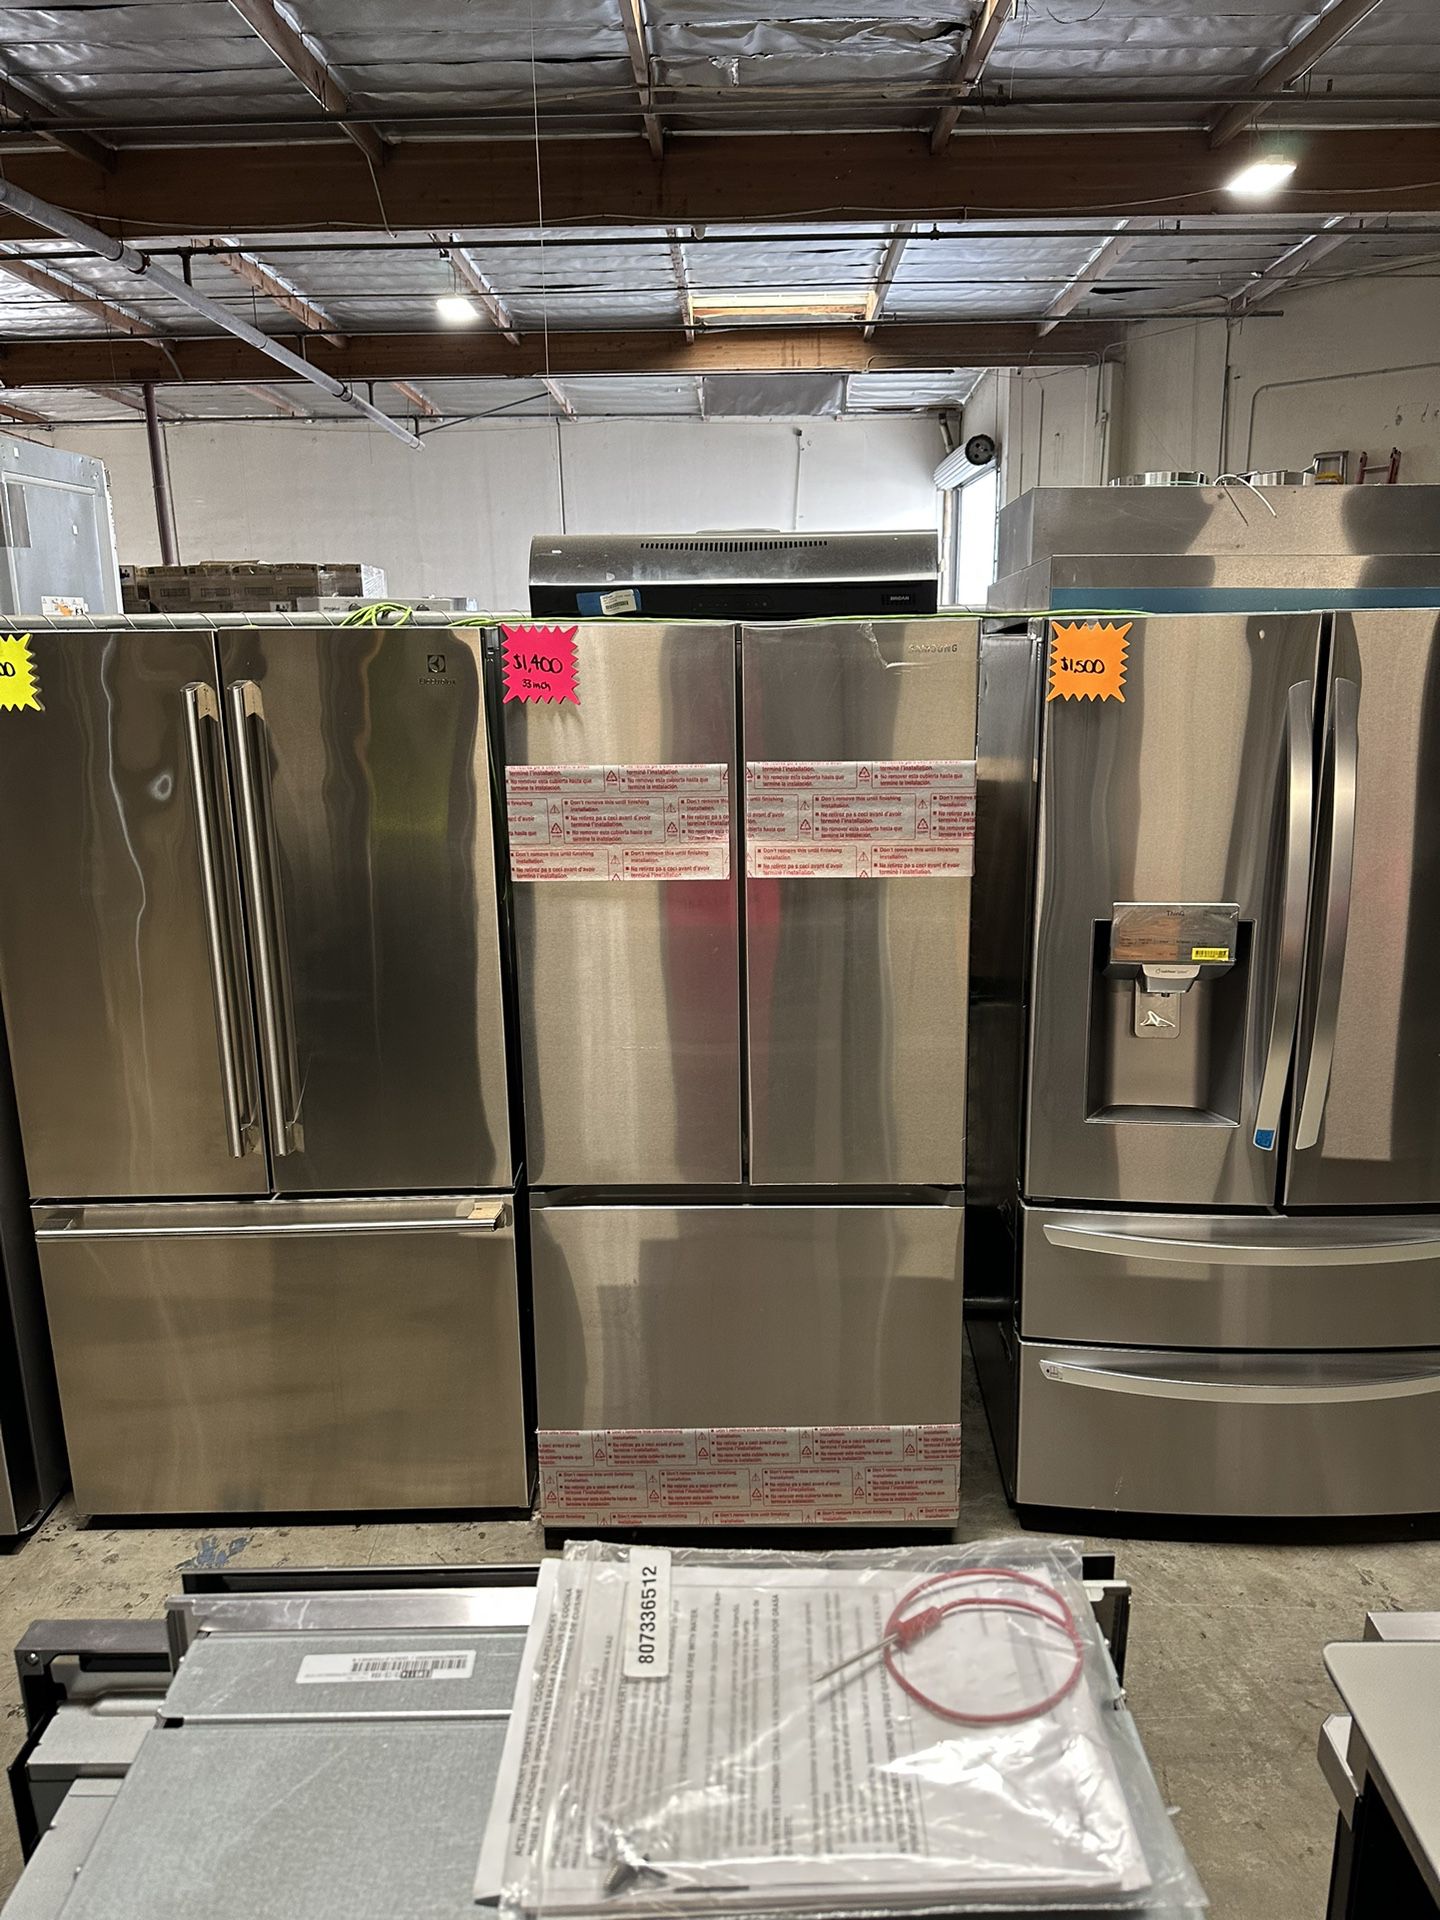 samsung 33 inch refrigerator apartment size brand new